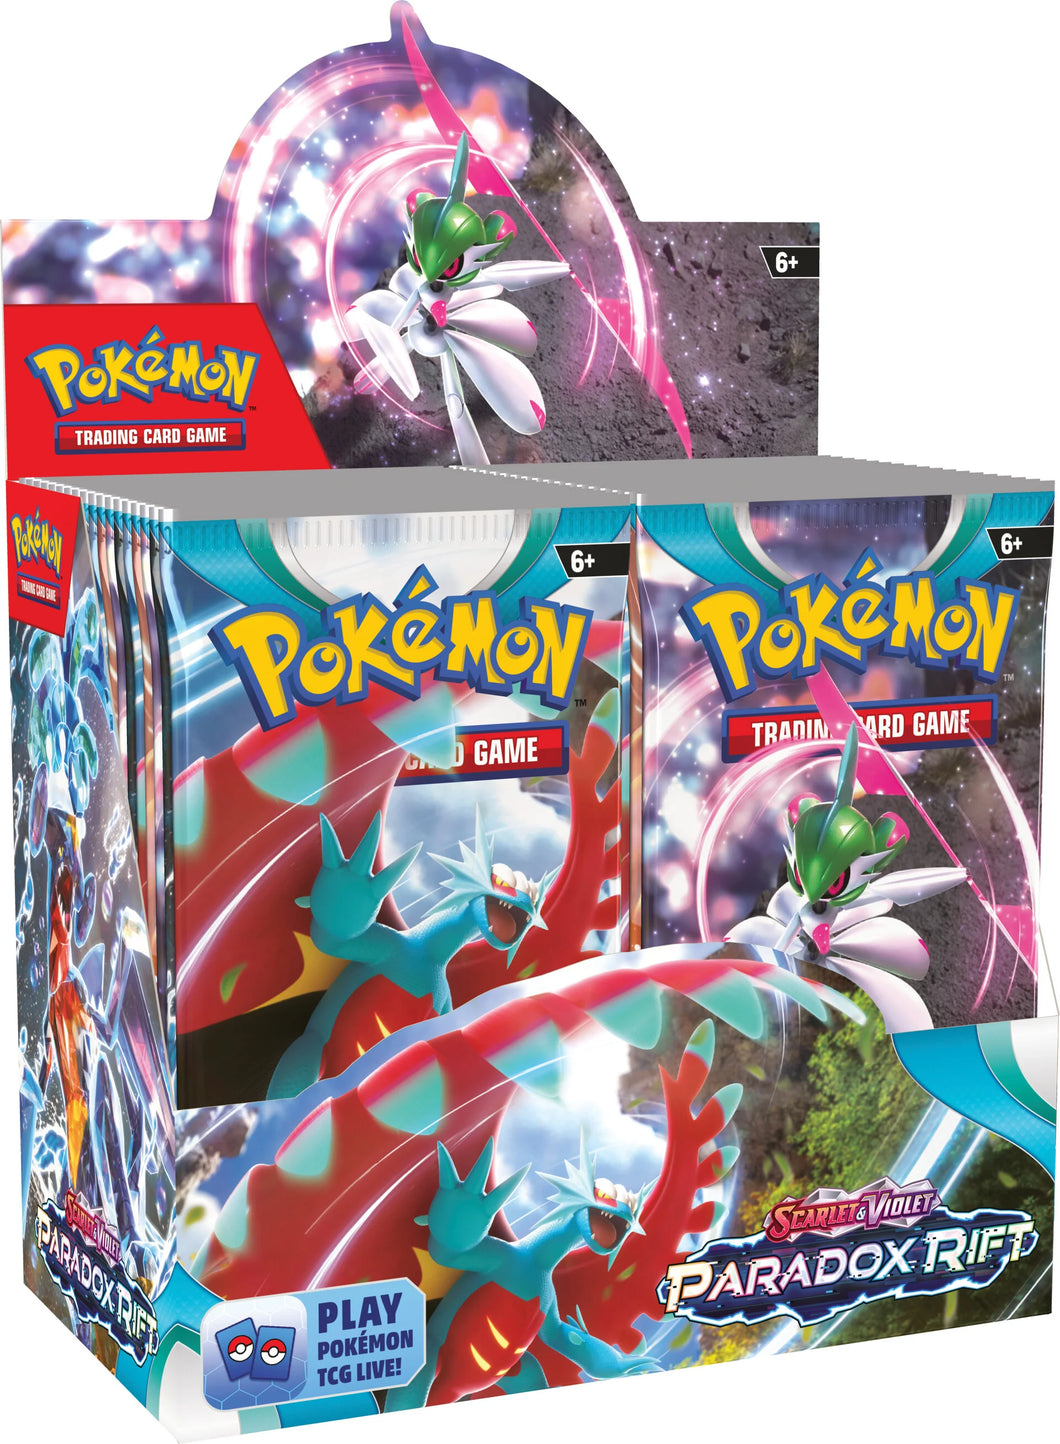 Pokémon: Scarlet & Violet - Paradox Rift - Booster Box (36 Packs)